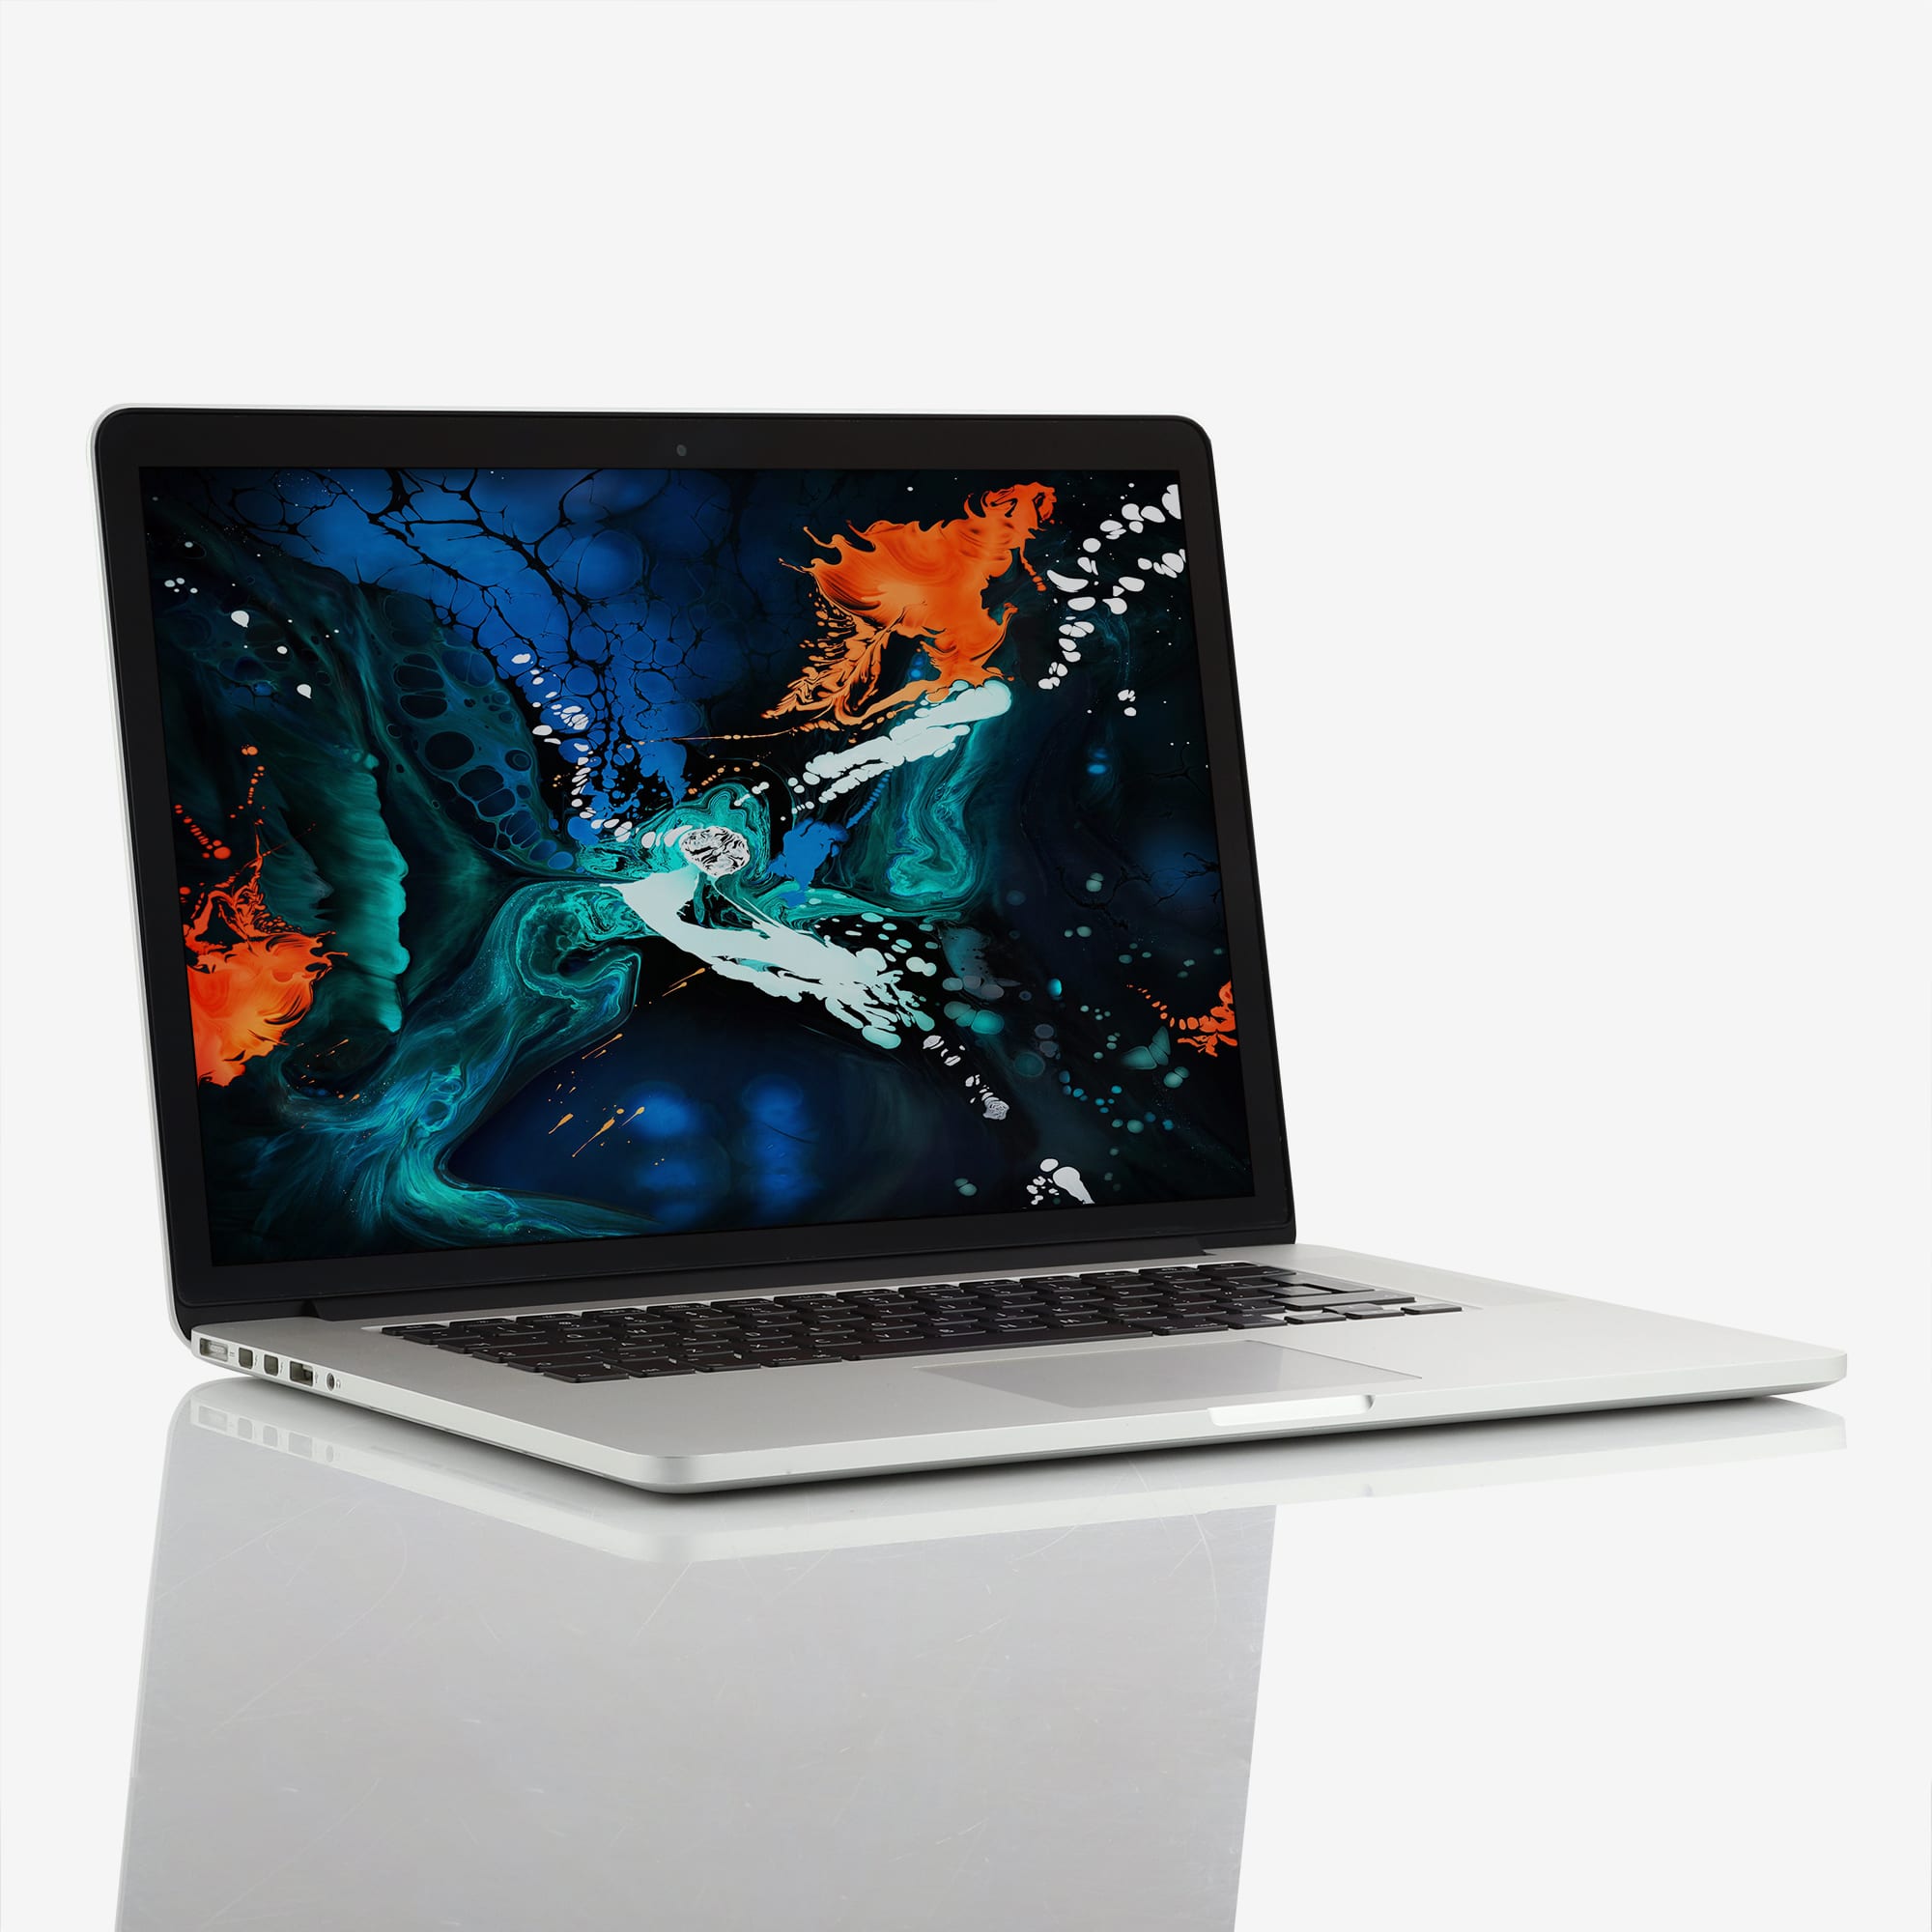 1 x Apple MacBook Pro Retina 15 Inch Intel Core i7 2.80 GHz (2014)